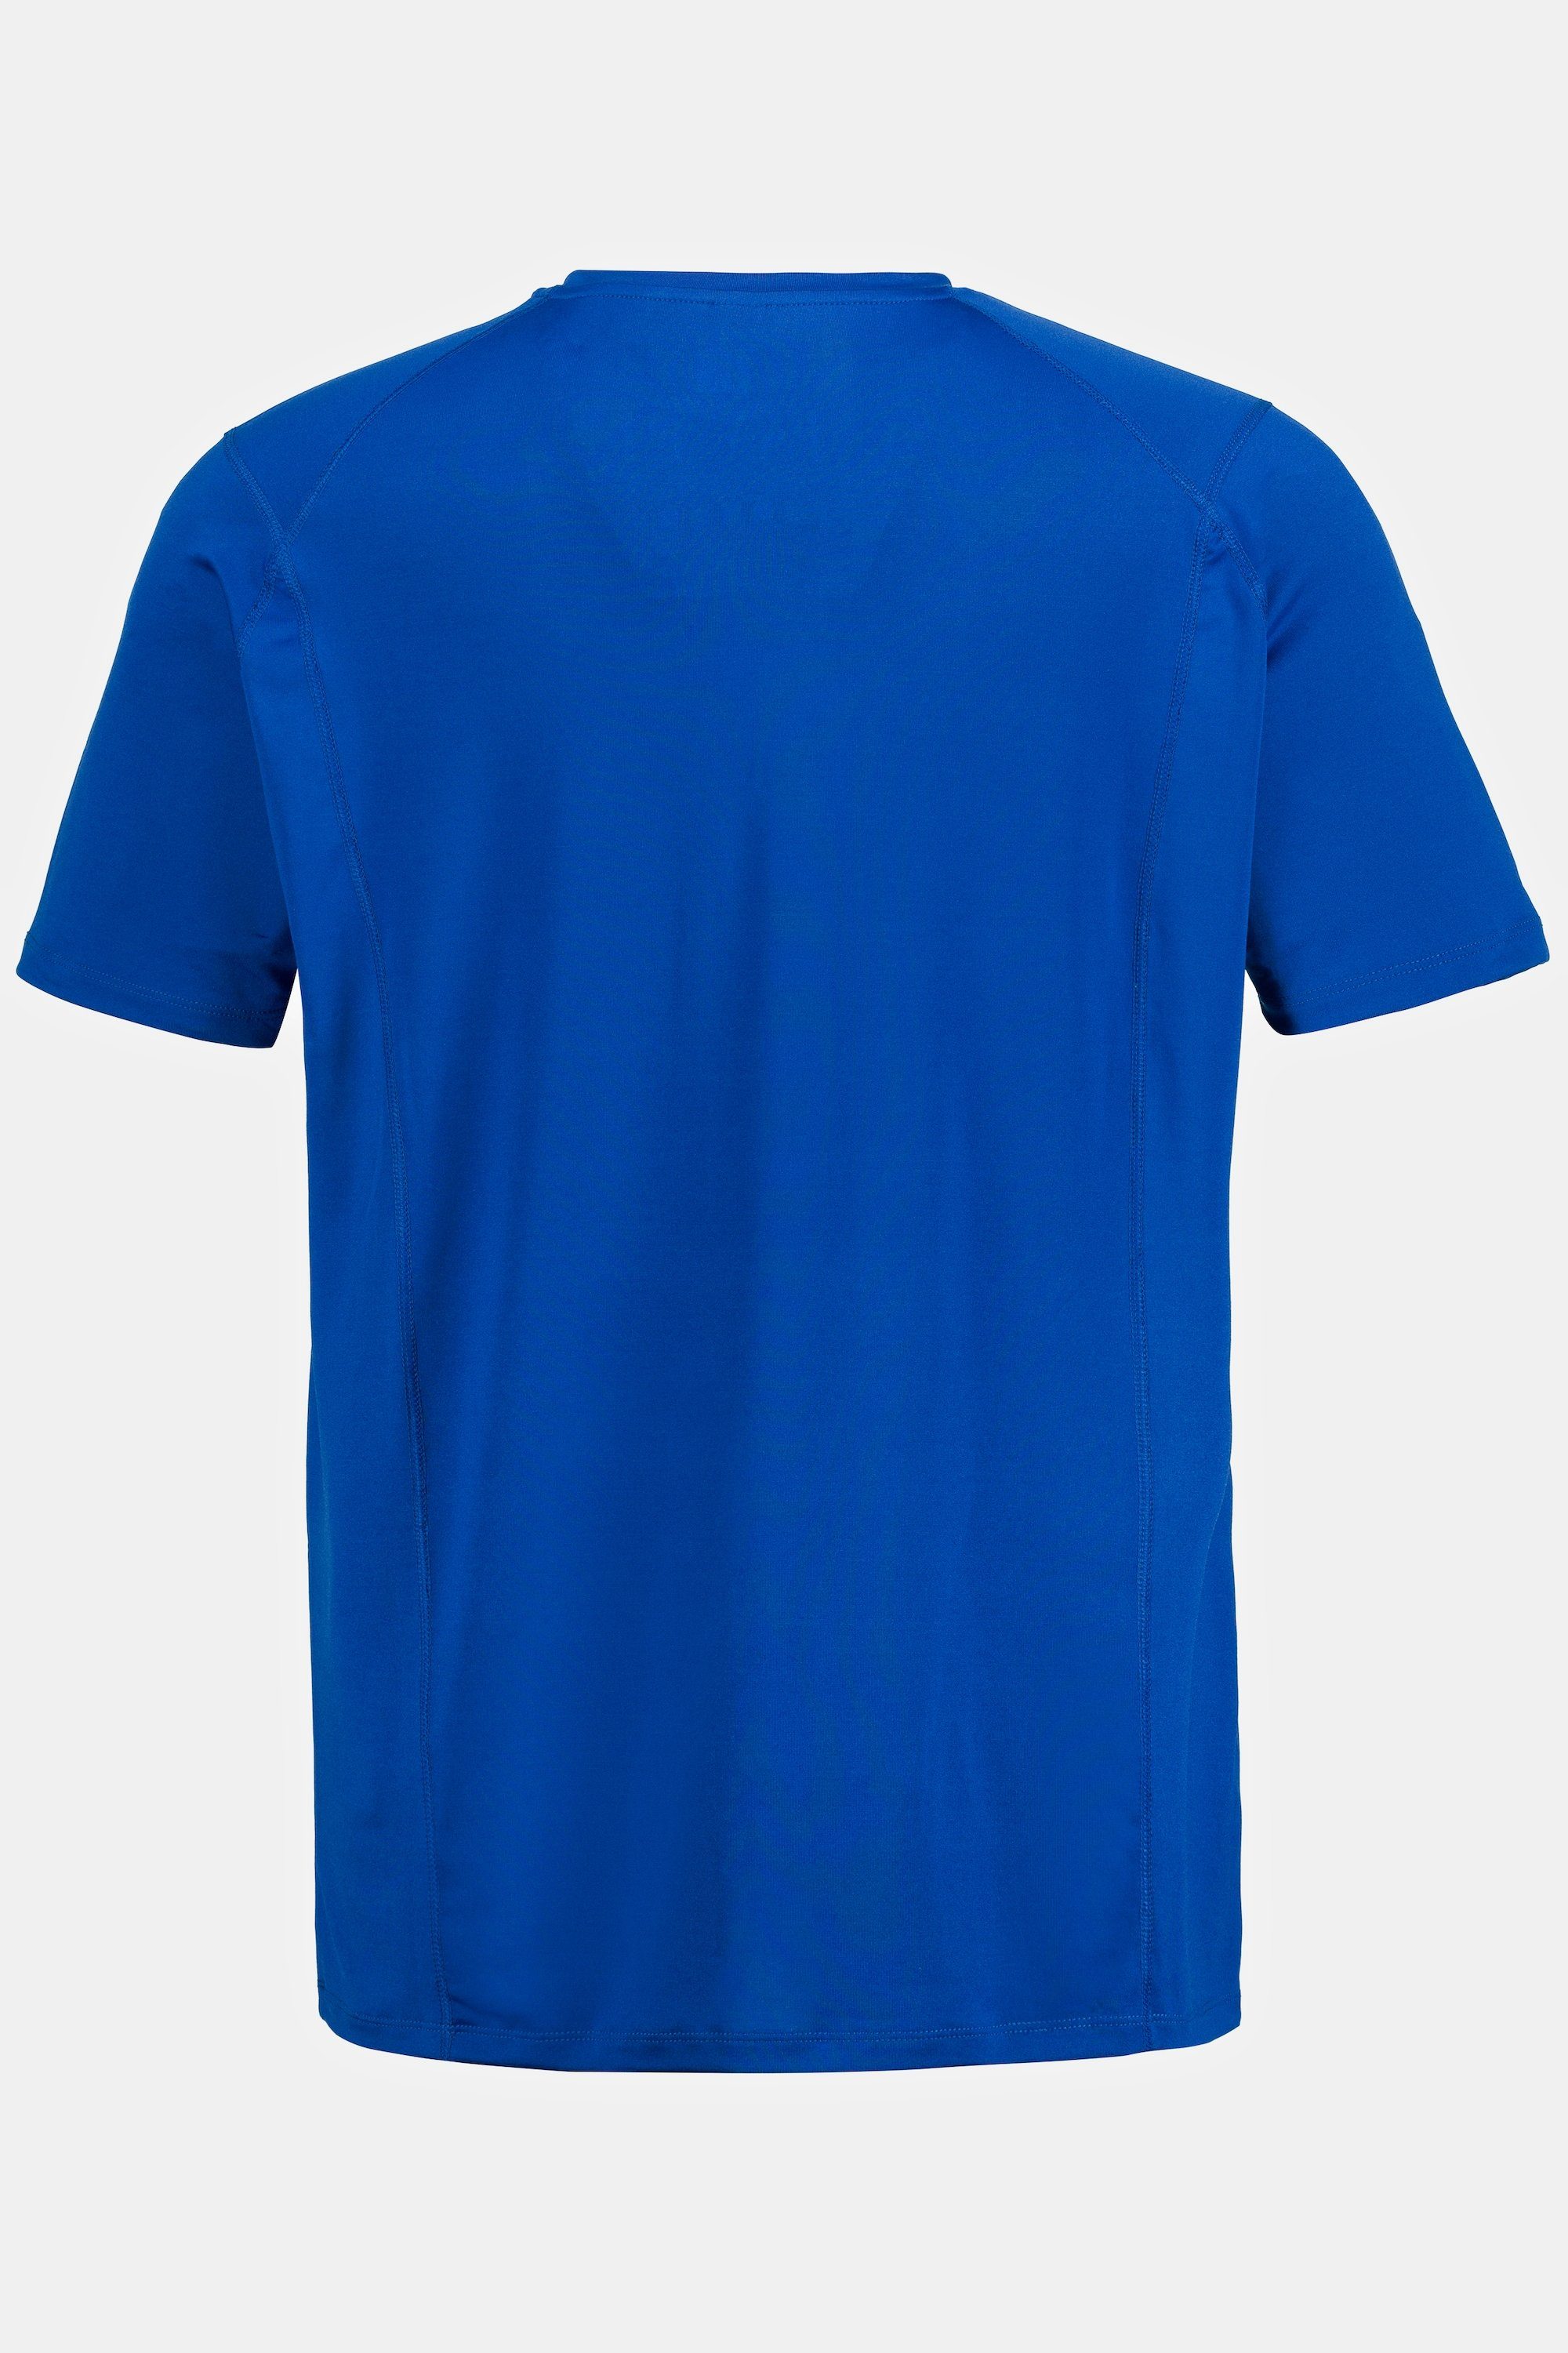 blau T-Shirt Halbarm Funktions-Shirt JP1880 FLEXNAMIC® Fitness